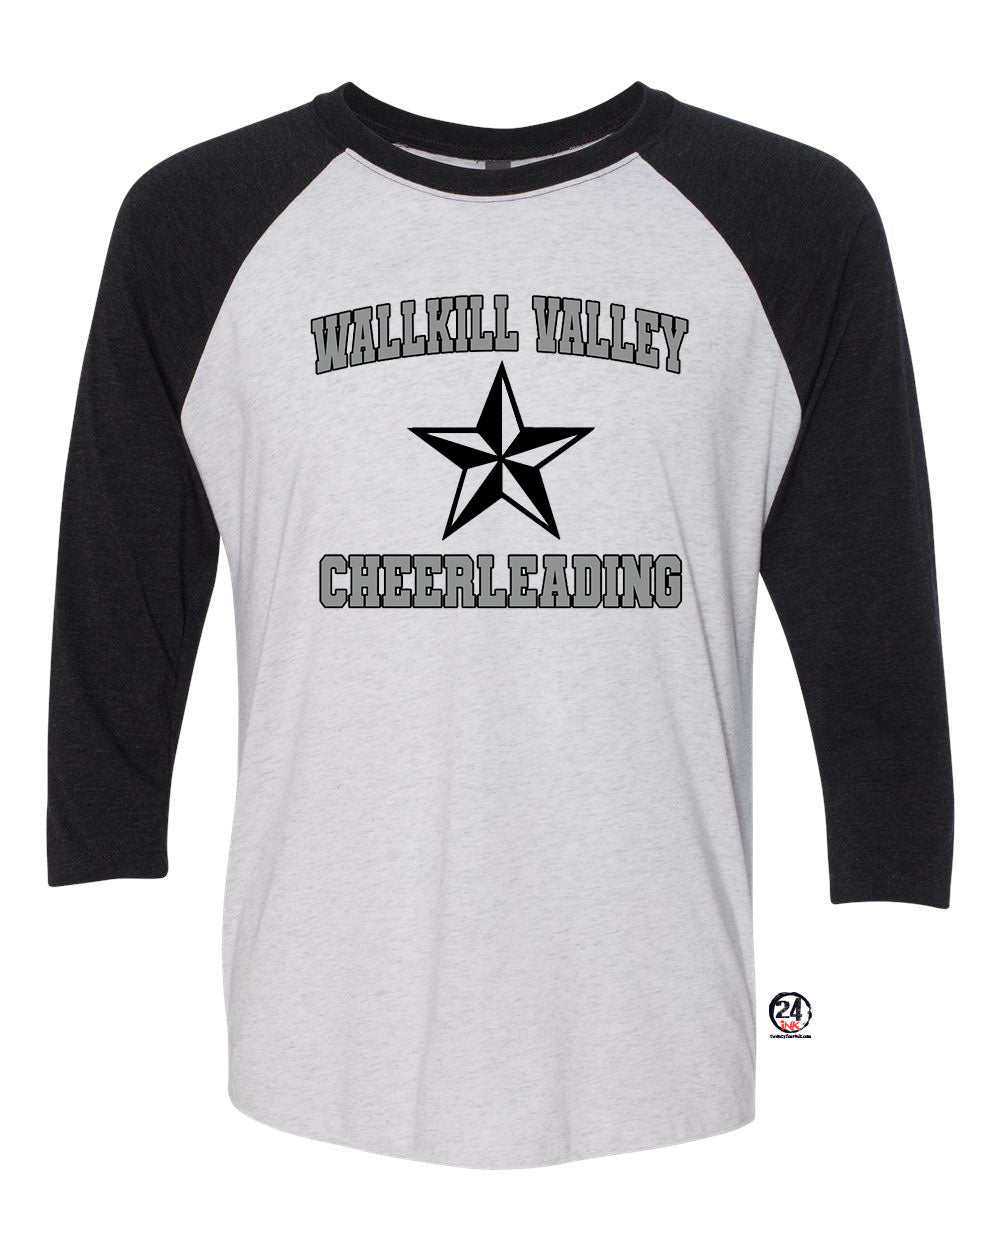 Wallkill Cheer Design 6 raglan shirt